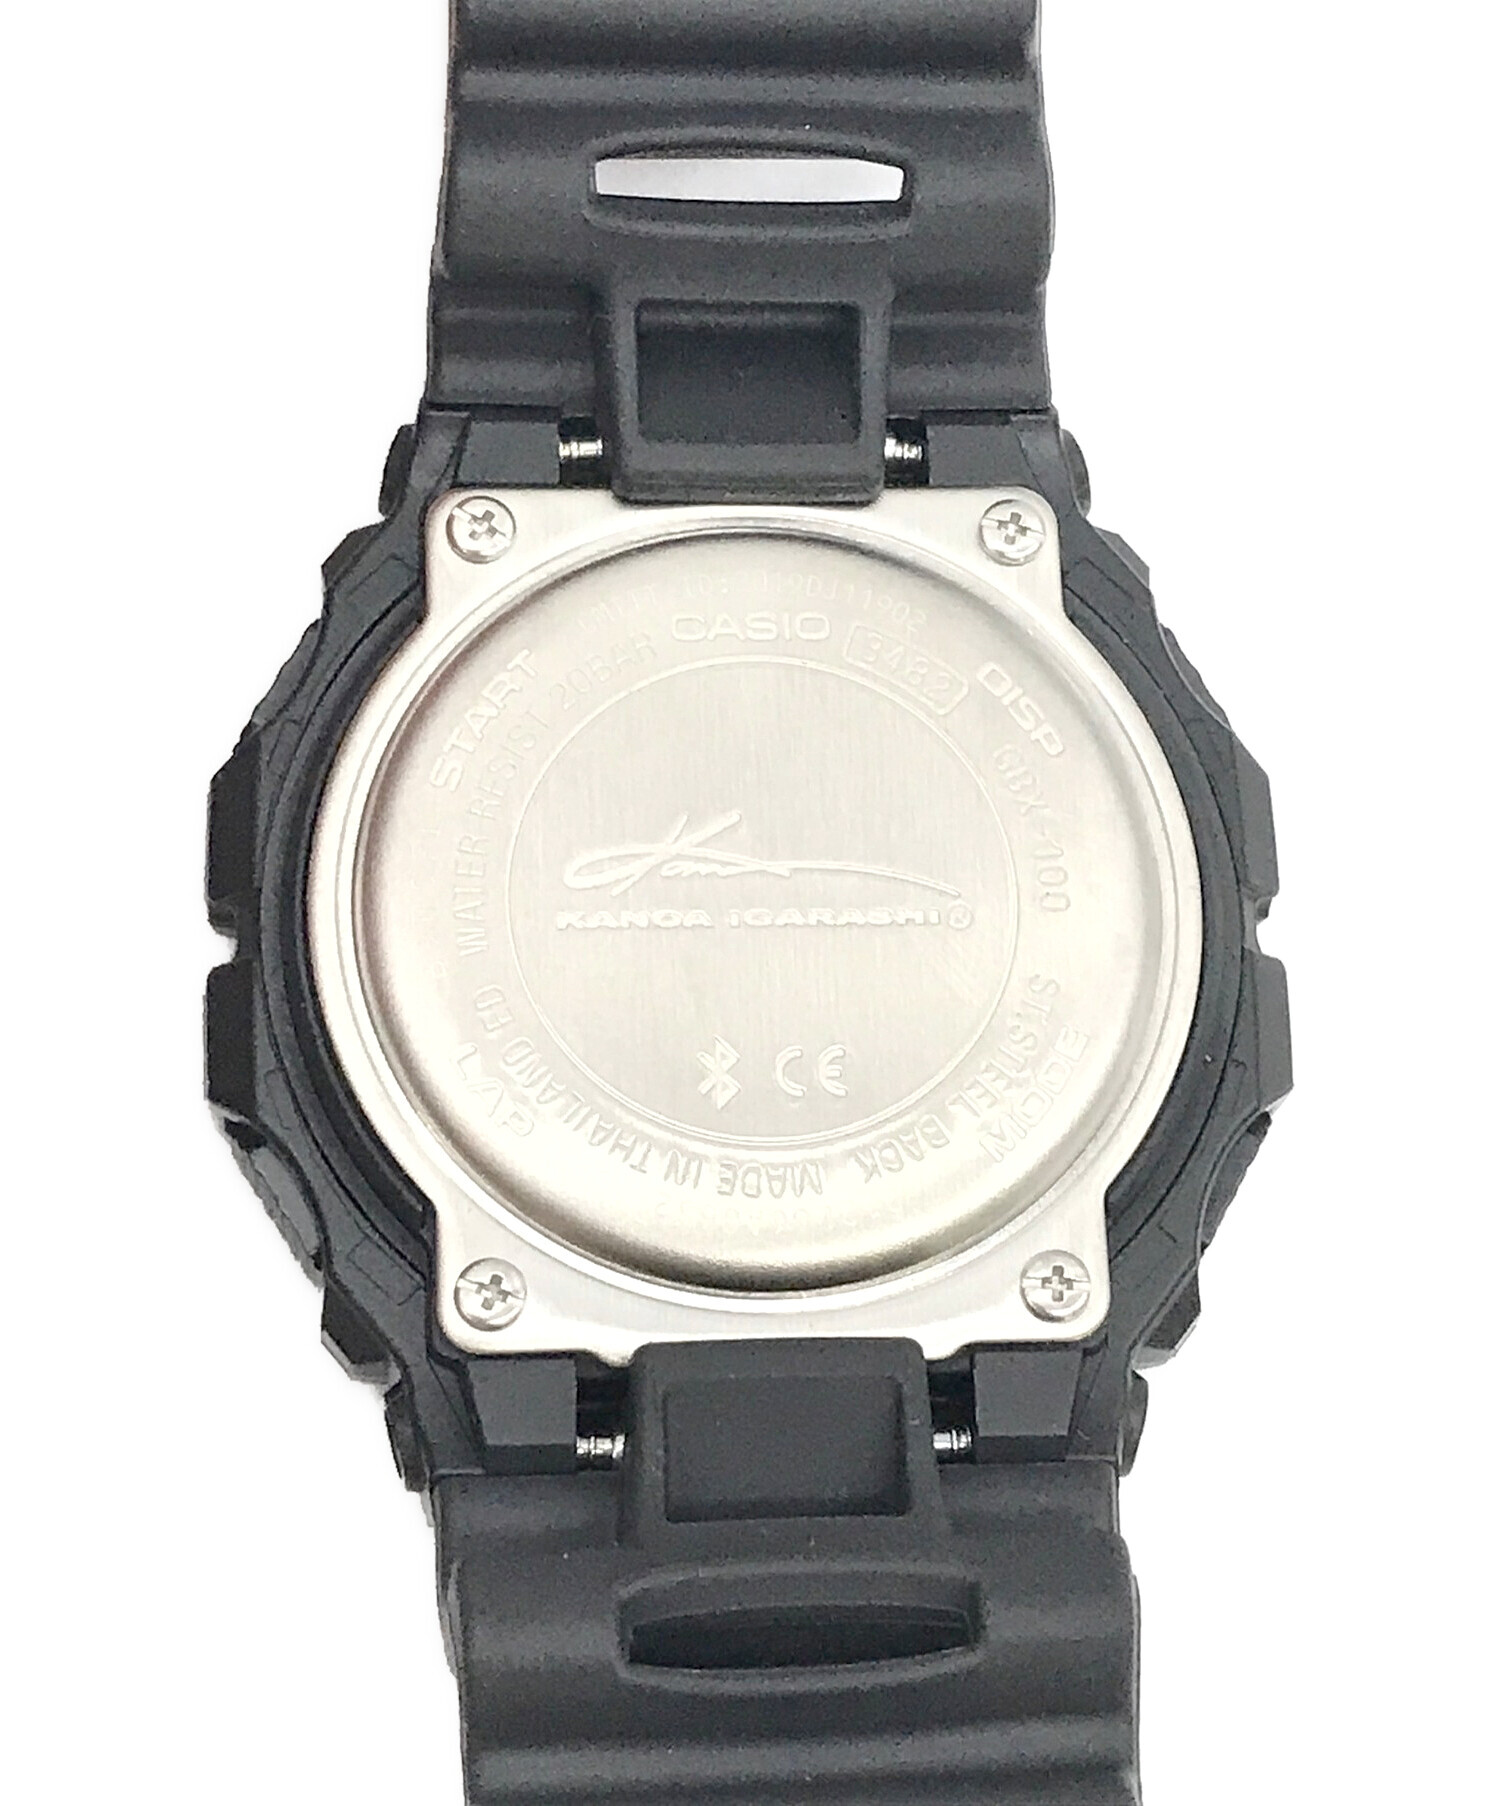 CASIO (カシオ) KANOA IGARASHI (カノアイガラシ) 腕時計 G-SHOCK GBX-100KI-1JR 未使用品